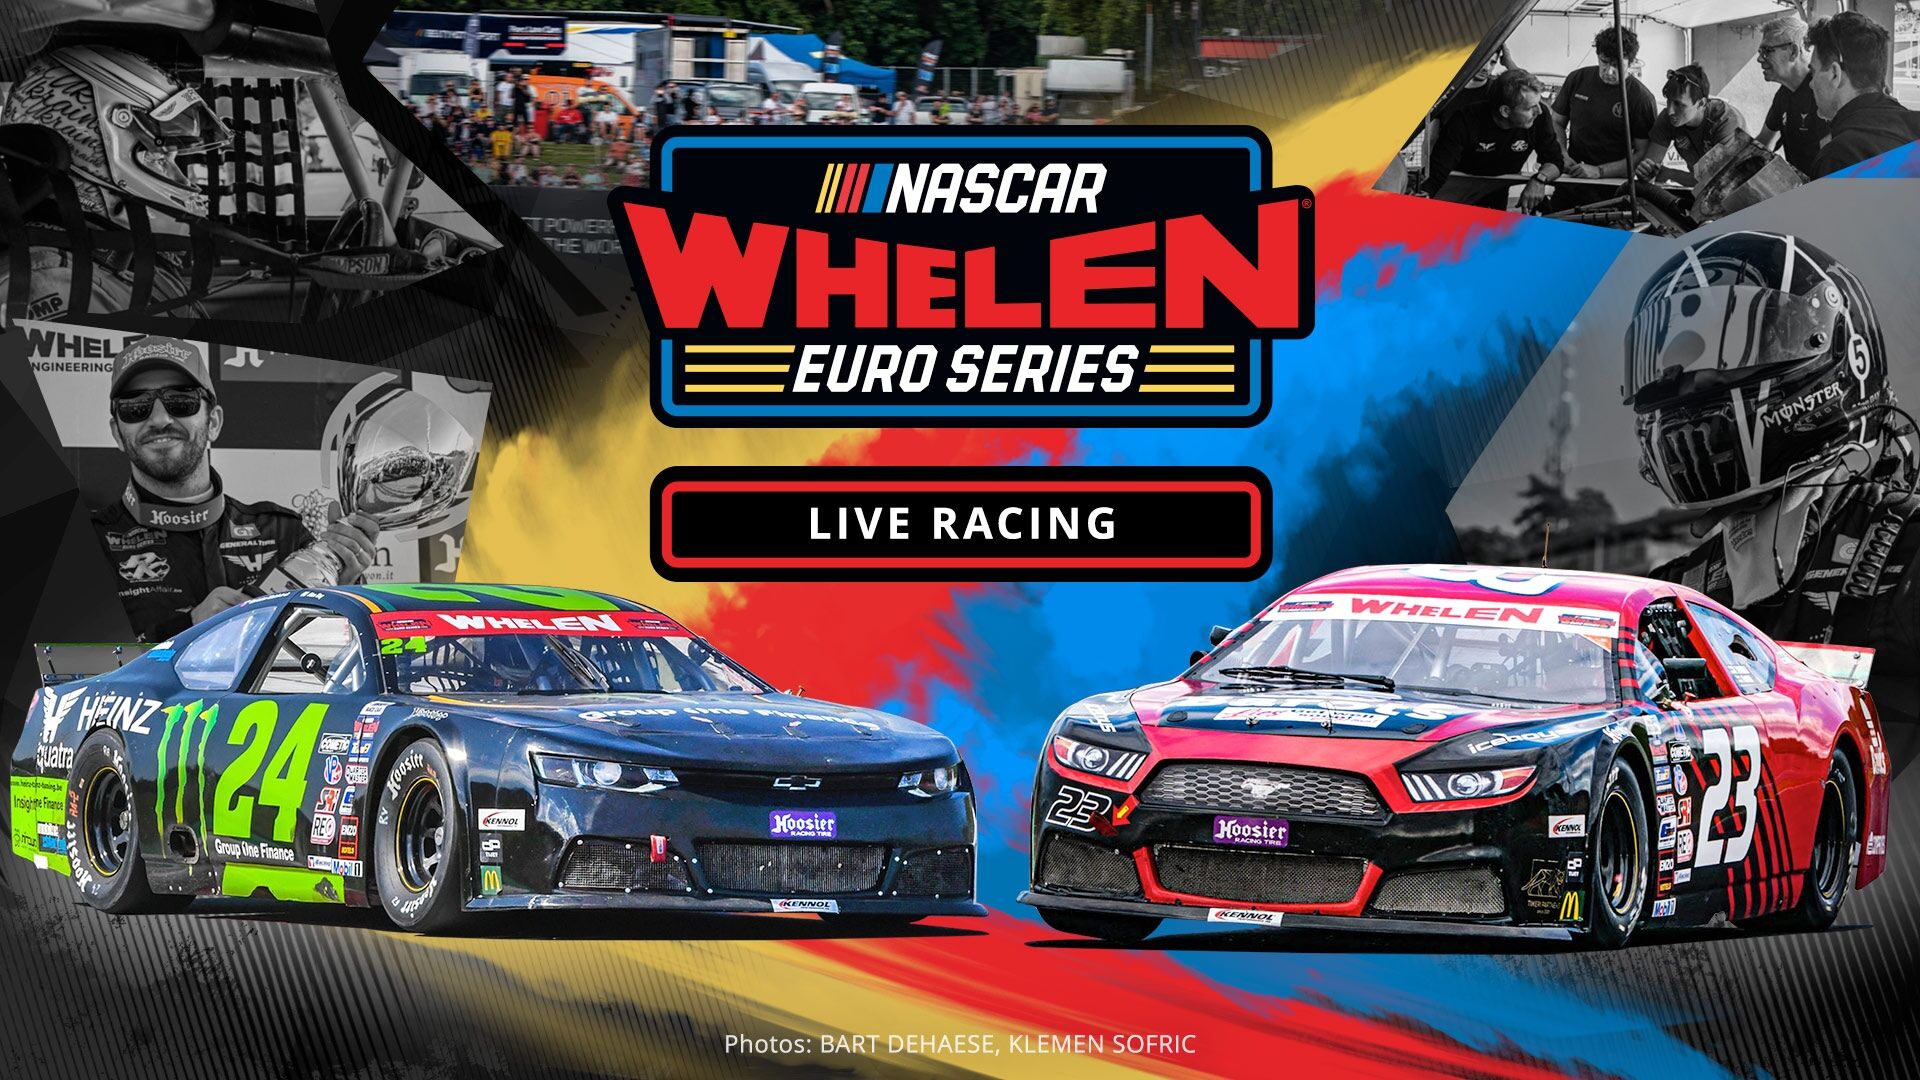 NASCAR Whelen Euro Series Live Racing